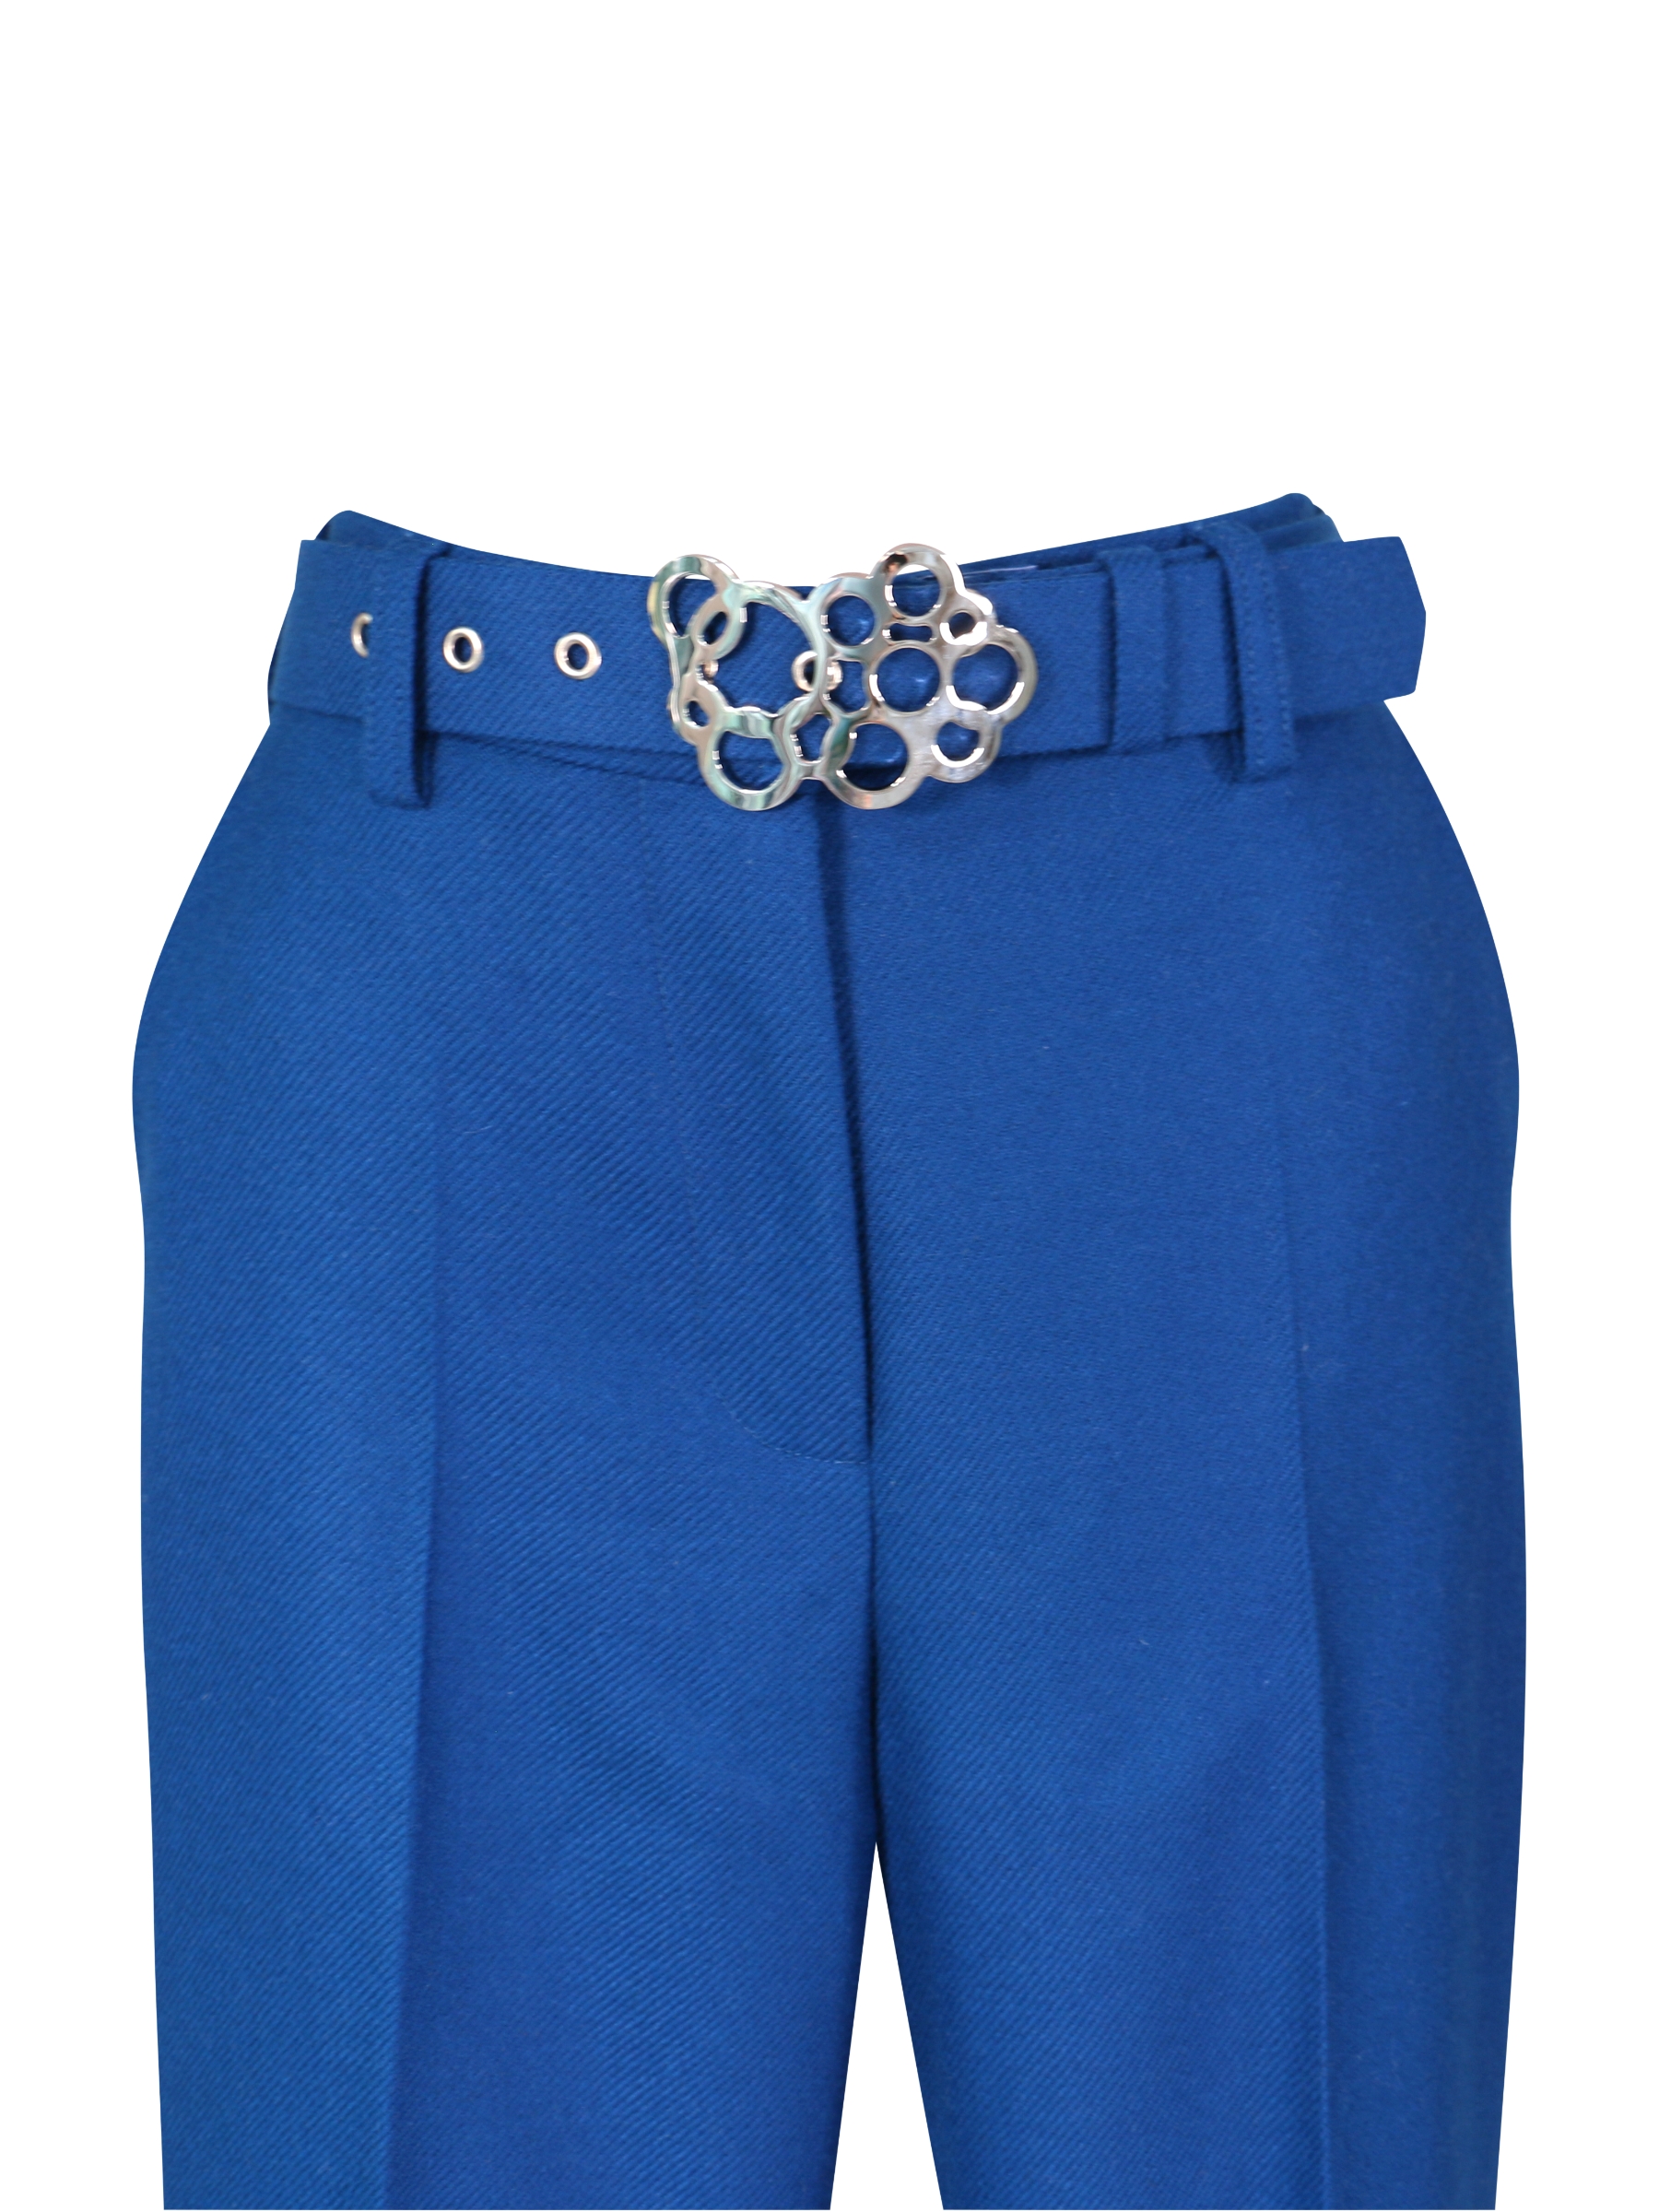 Capri Blue Cashmere Trousers